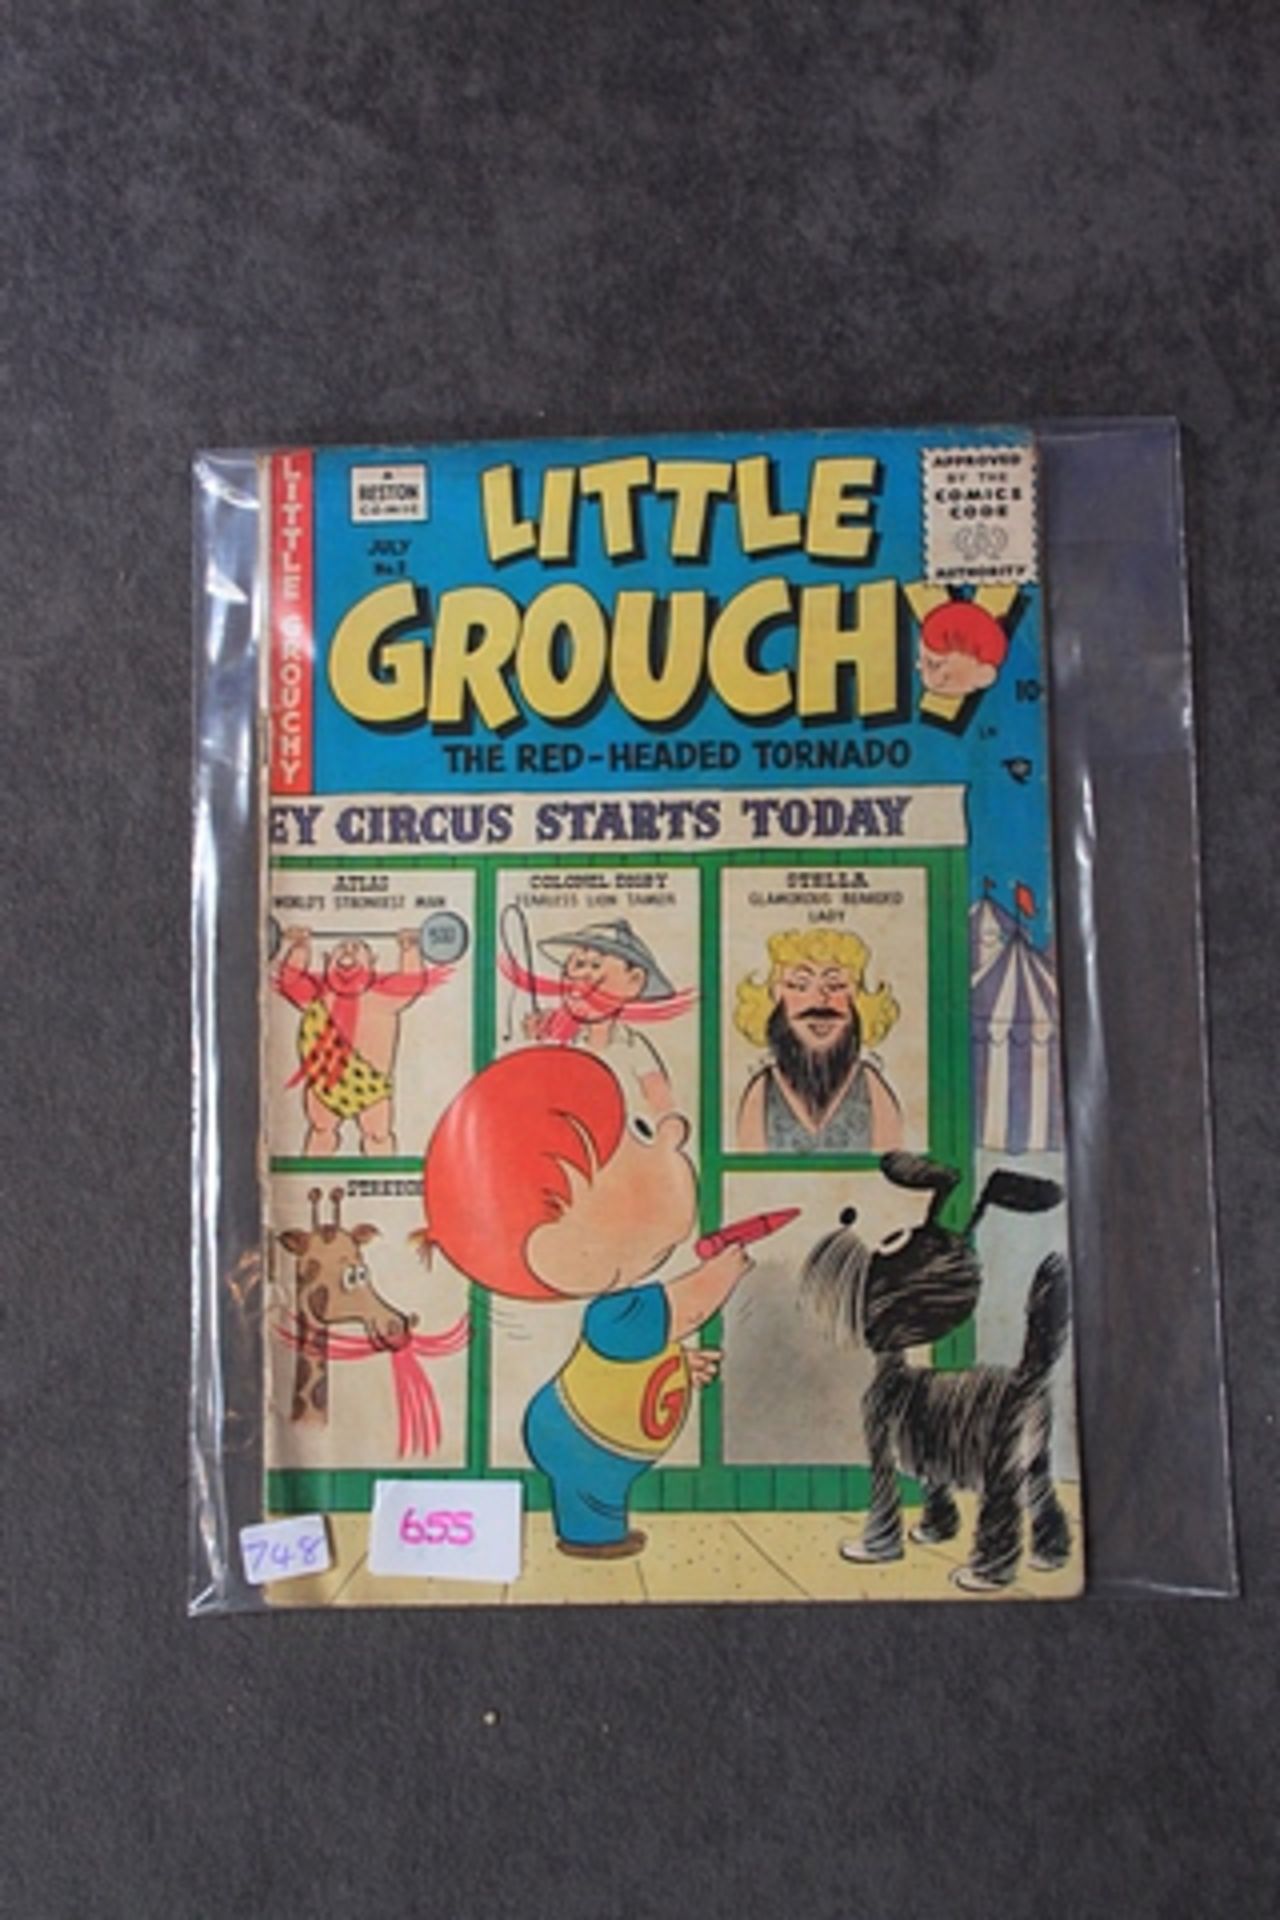 Little Grouchy #2 (June-July 1955) Reston Publications, 1955 Series